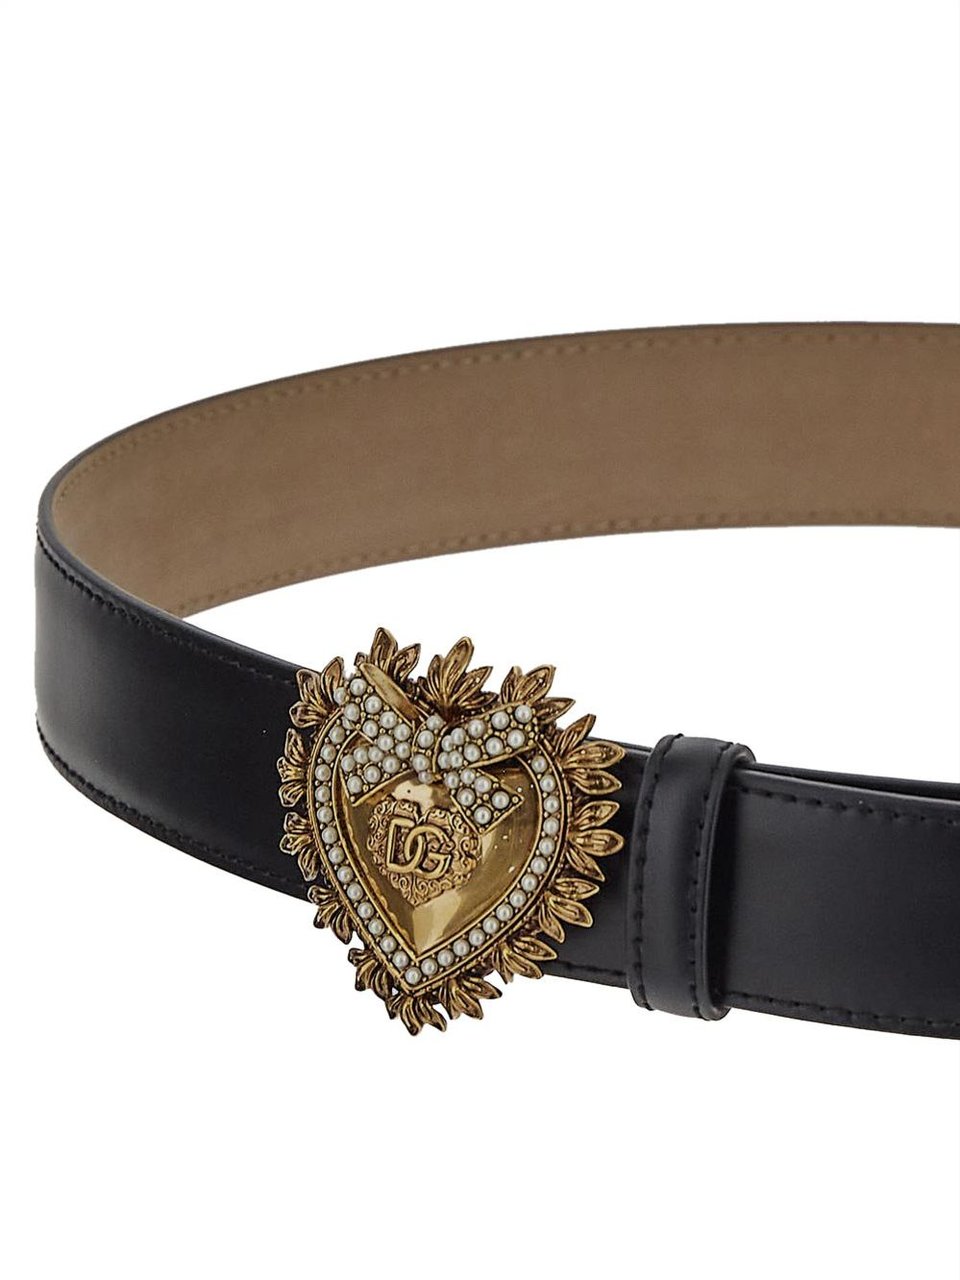 Dolce & Gabbana Devotion Belt In Lux Leather Zwart